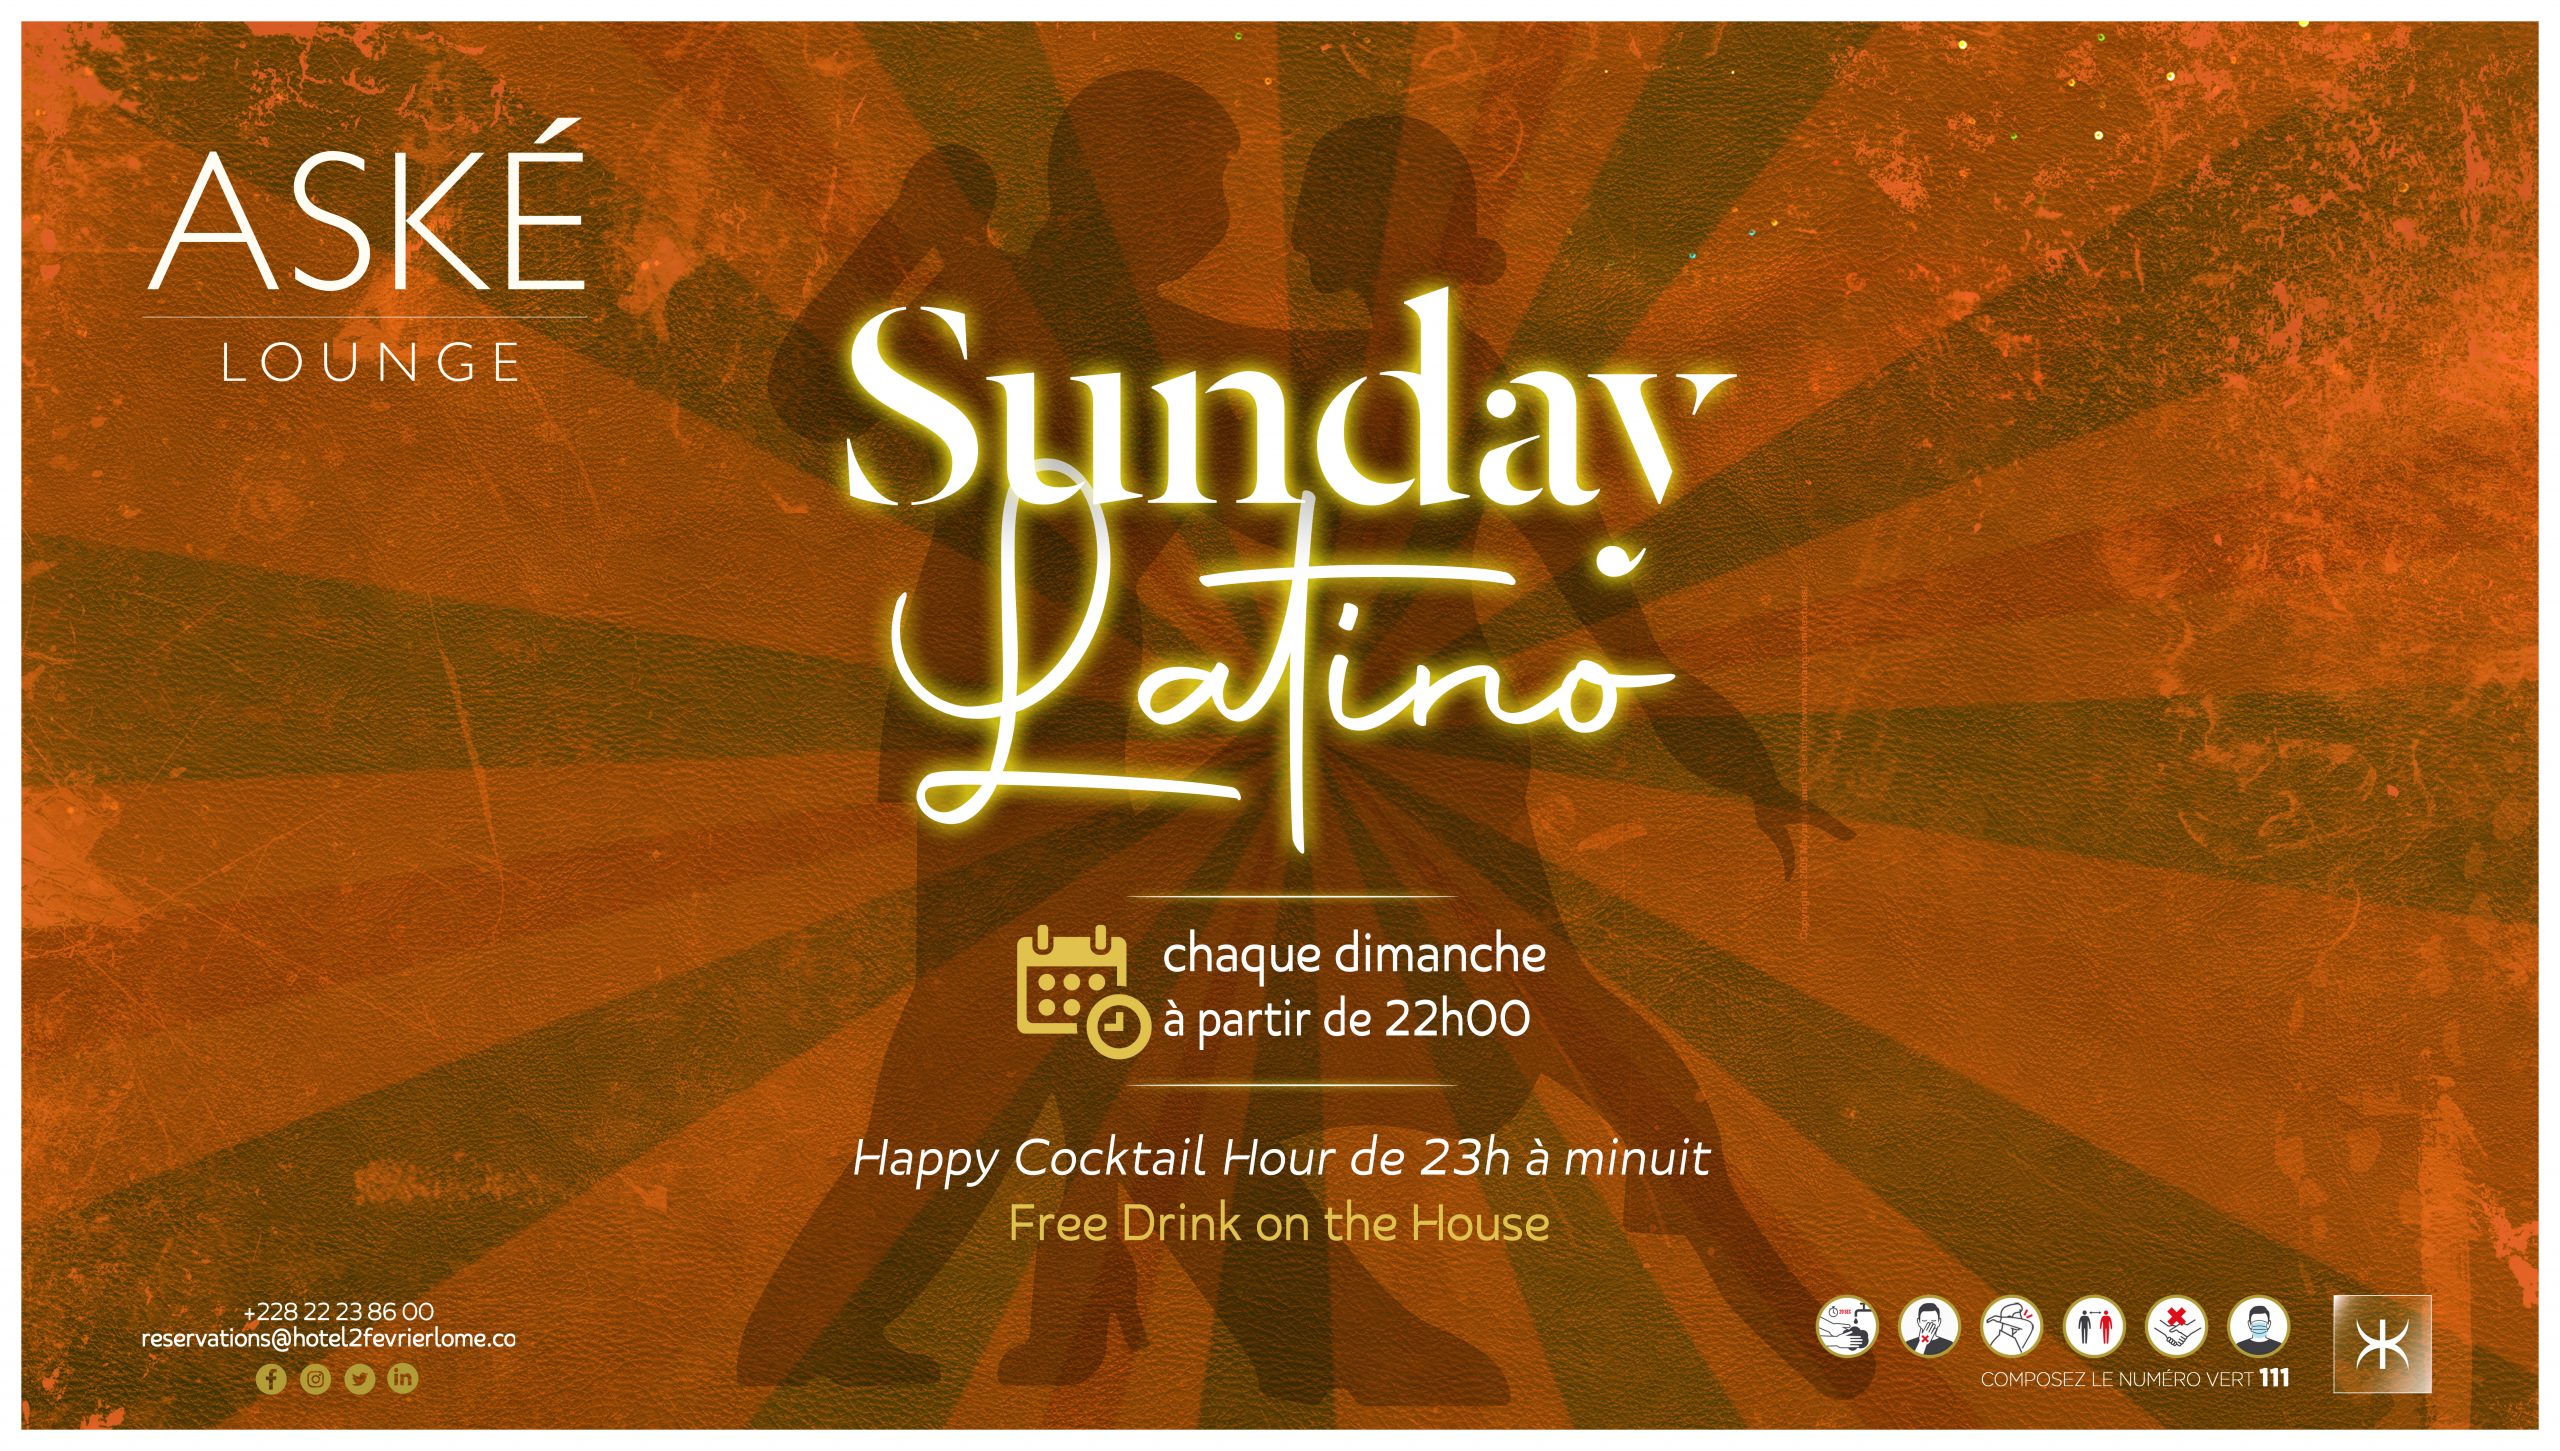 Sunday Latino ecran web